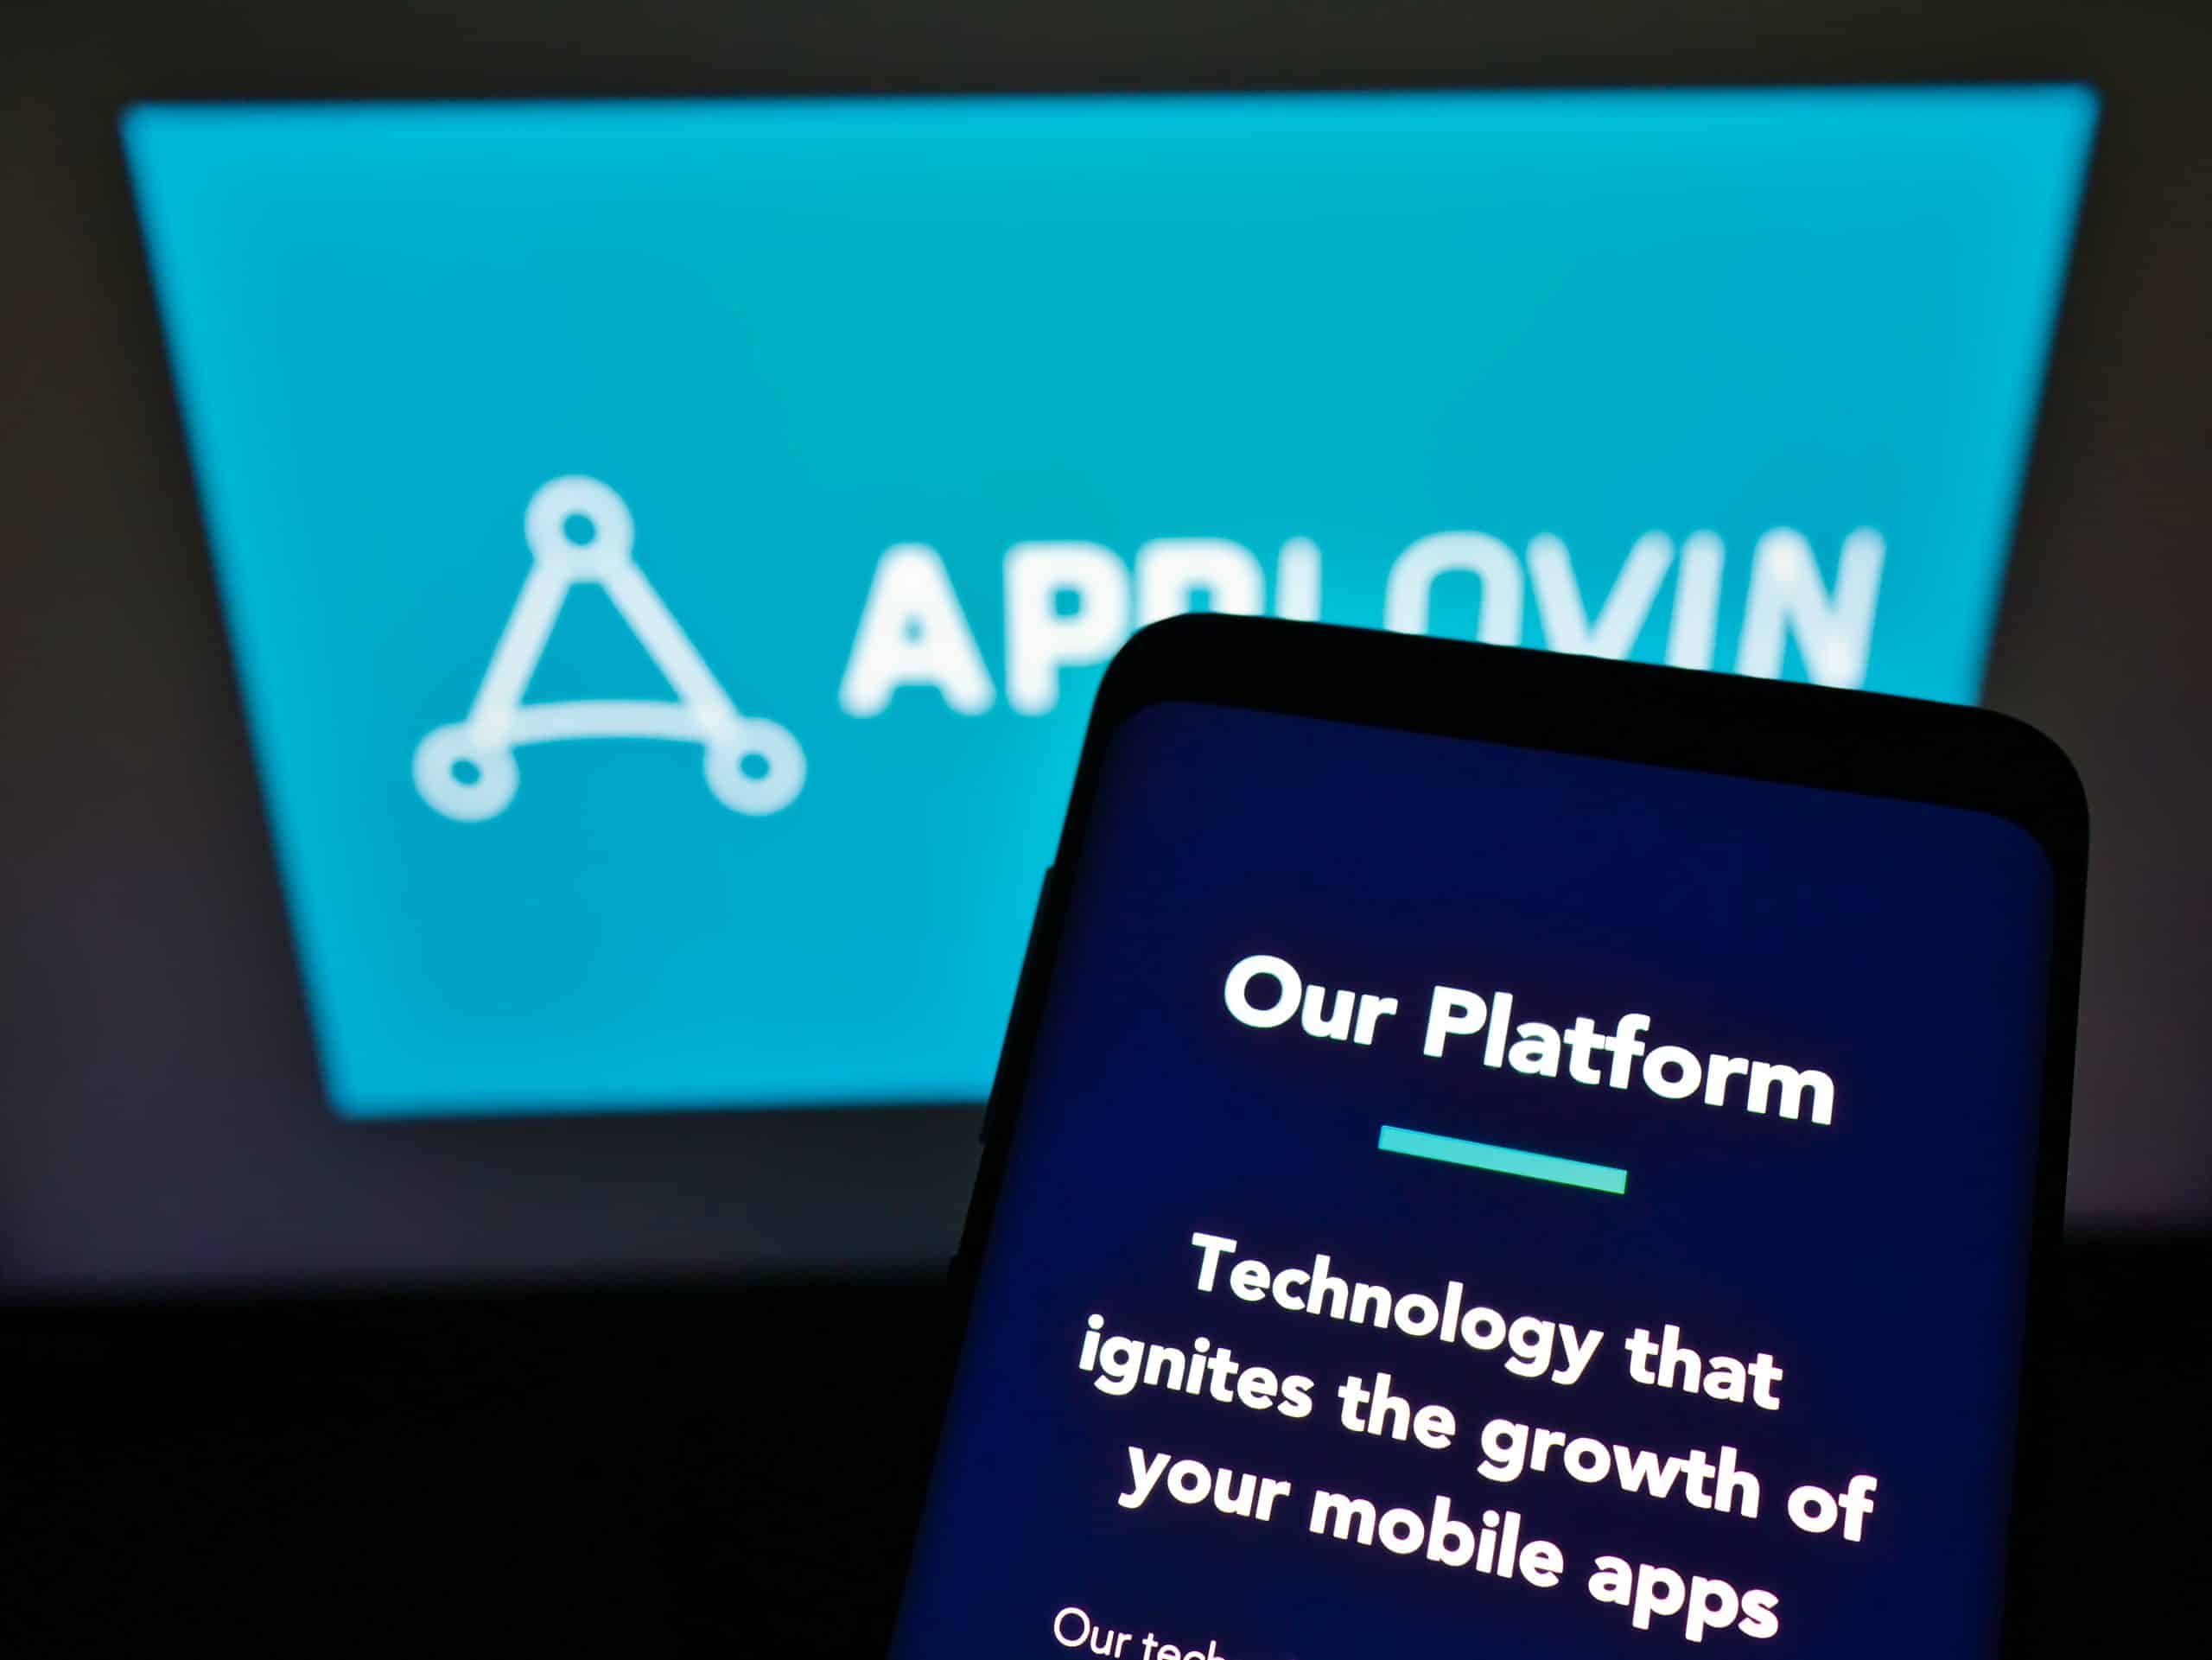 applovin logo and platform